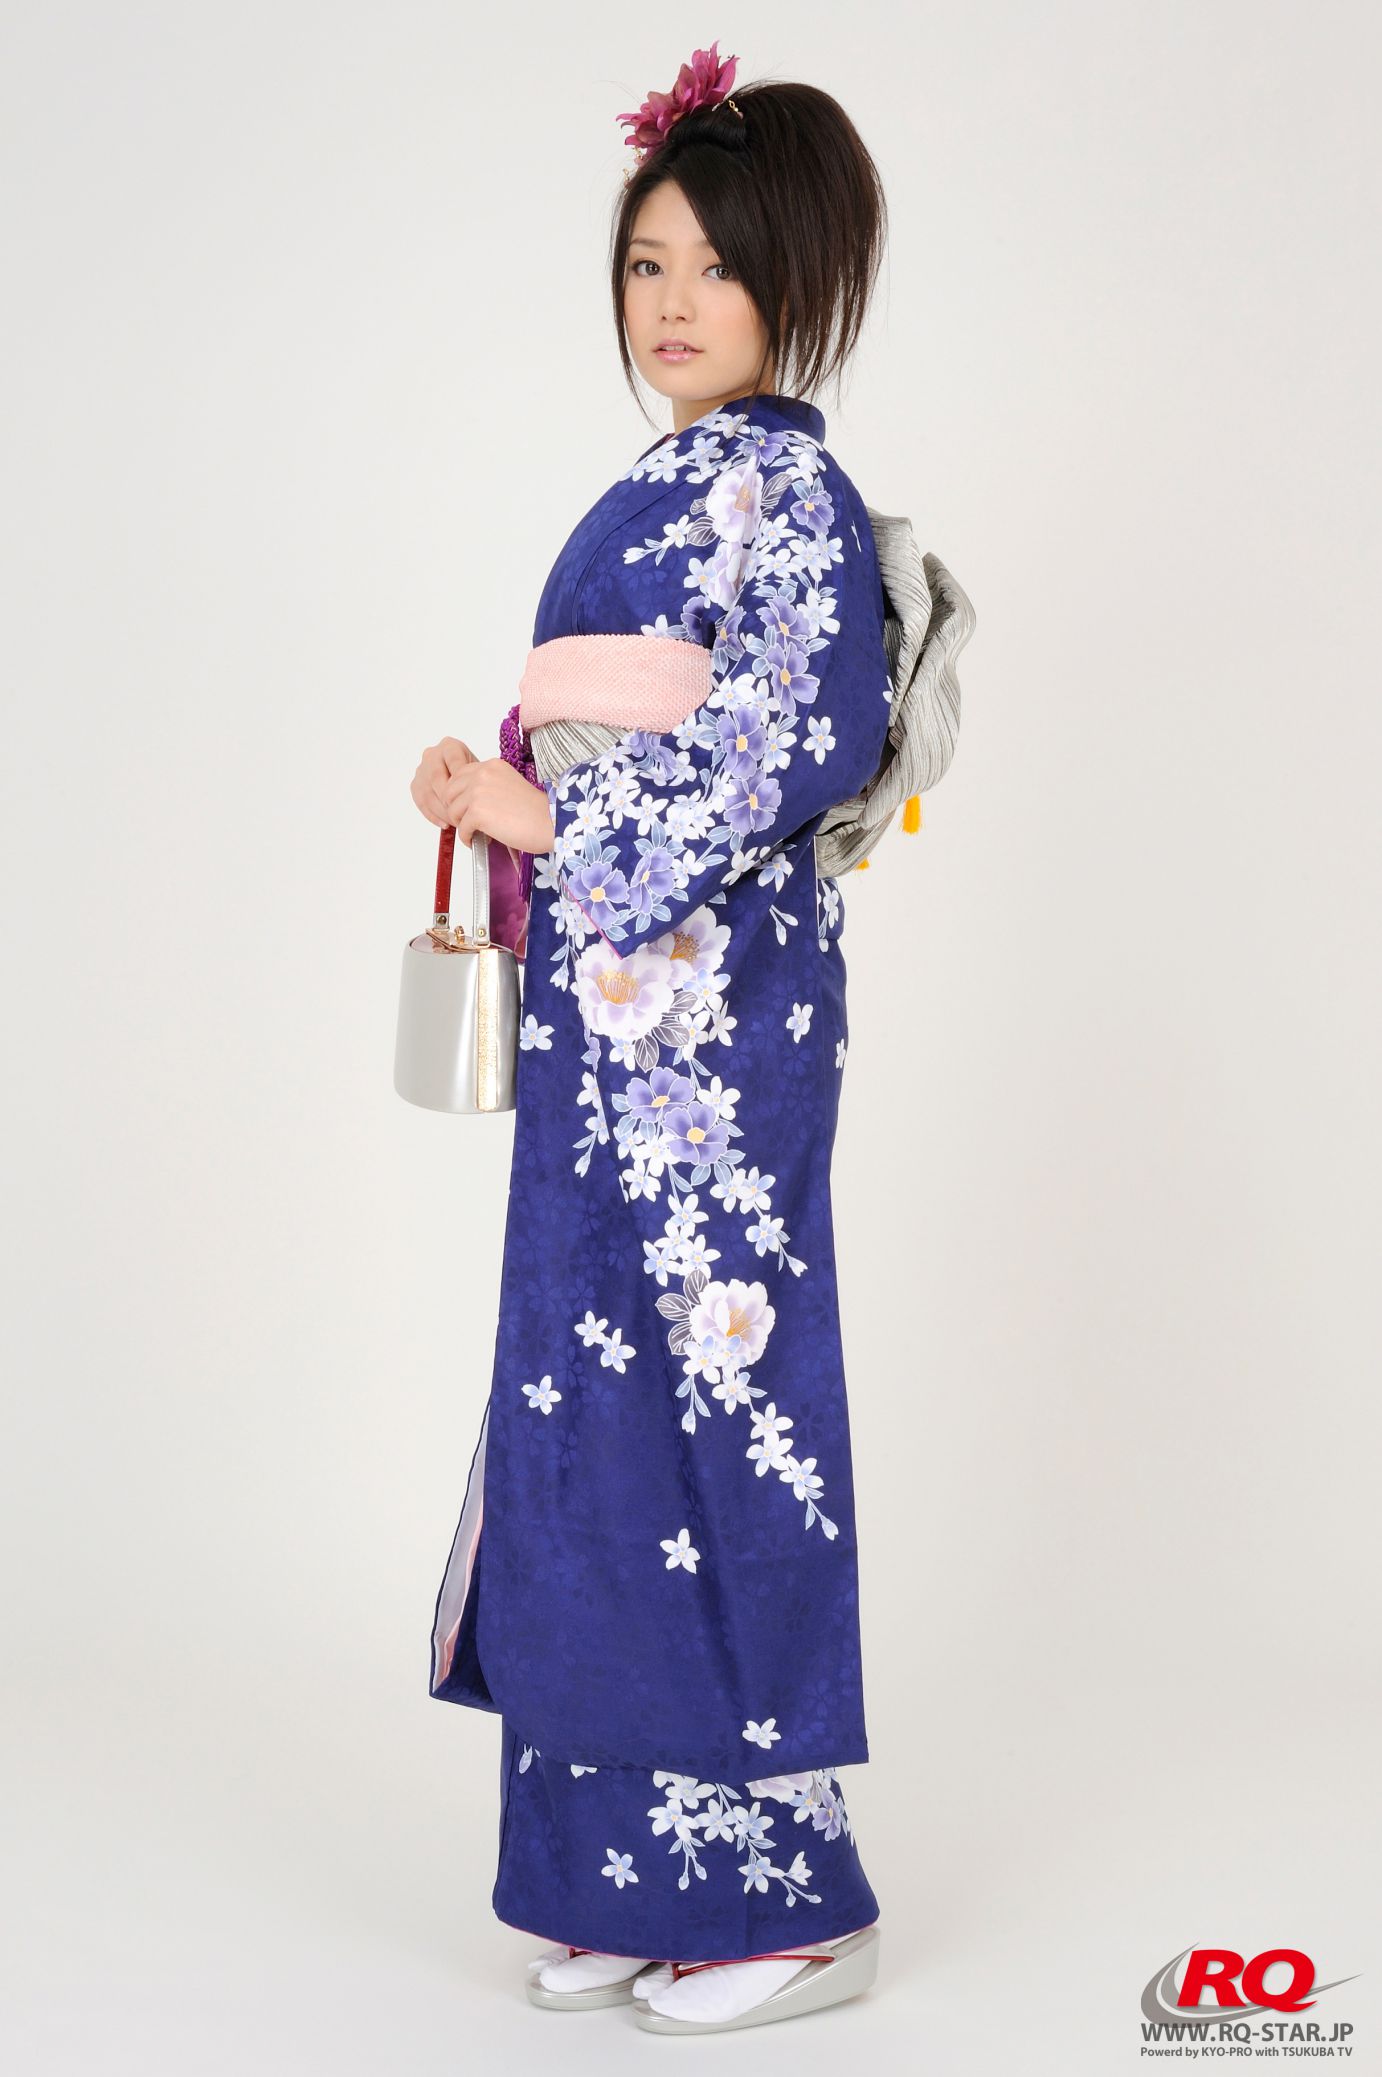 [RQ-STAR] NO.00068 古崎瞳 謹賀新年 Kimono – Happy New Year 和服系列 第64頁 No.dc8268